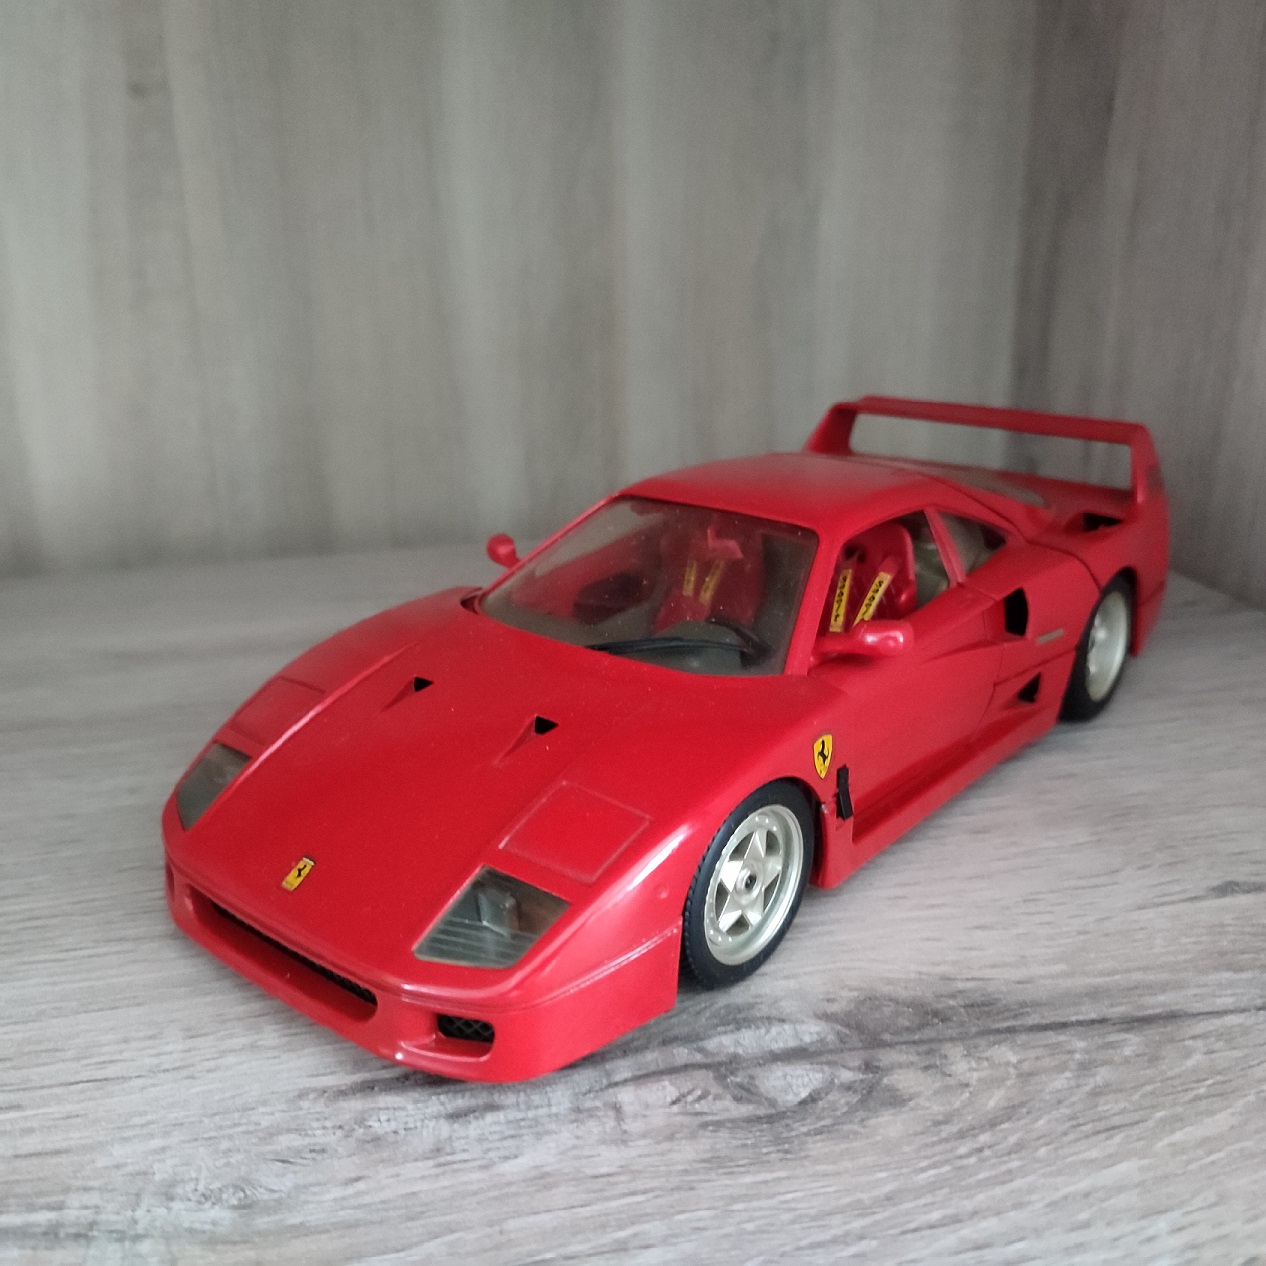 Pièce détachée miniature Burago Bburago Ferrari F40 1/18 1/18e 1/18eme